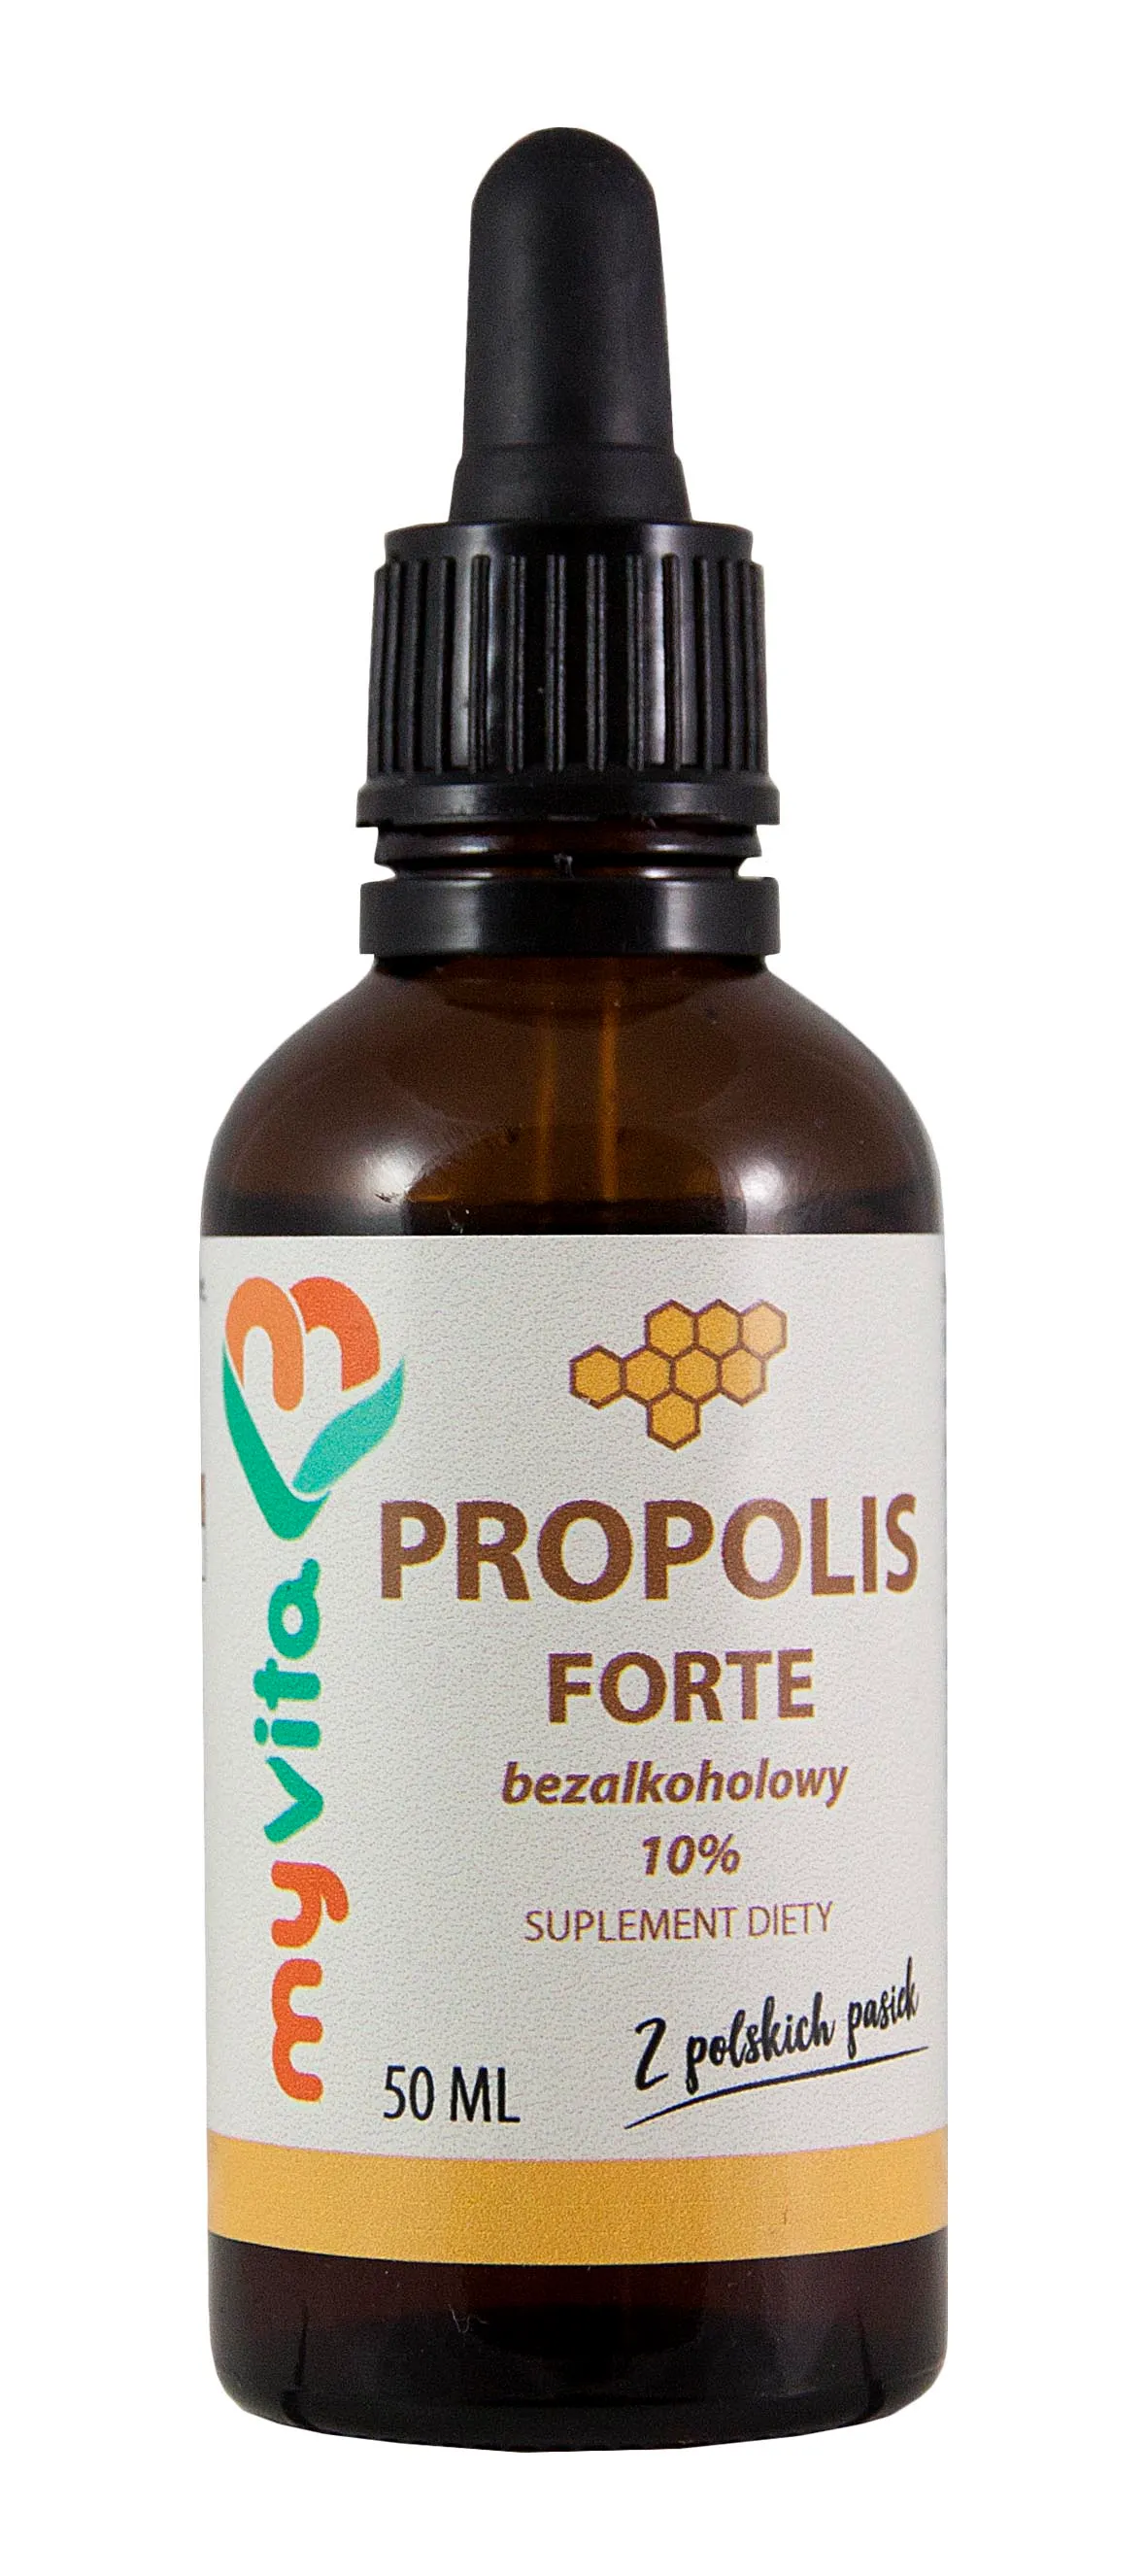 MyVita, Propolis 10% Forte, bezalkoholowy, suplement diety, krople, 50ml